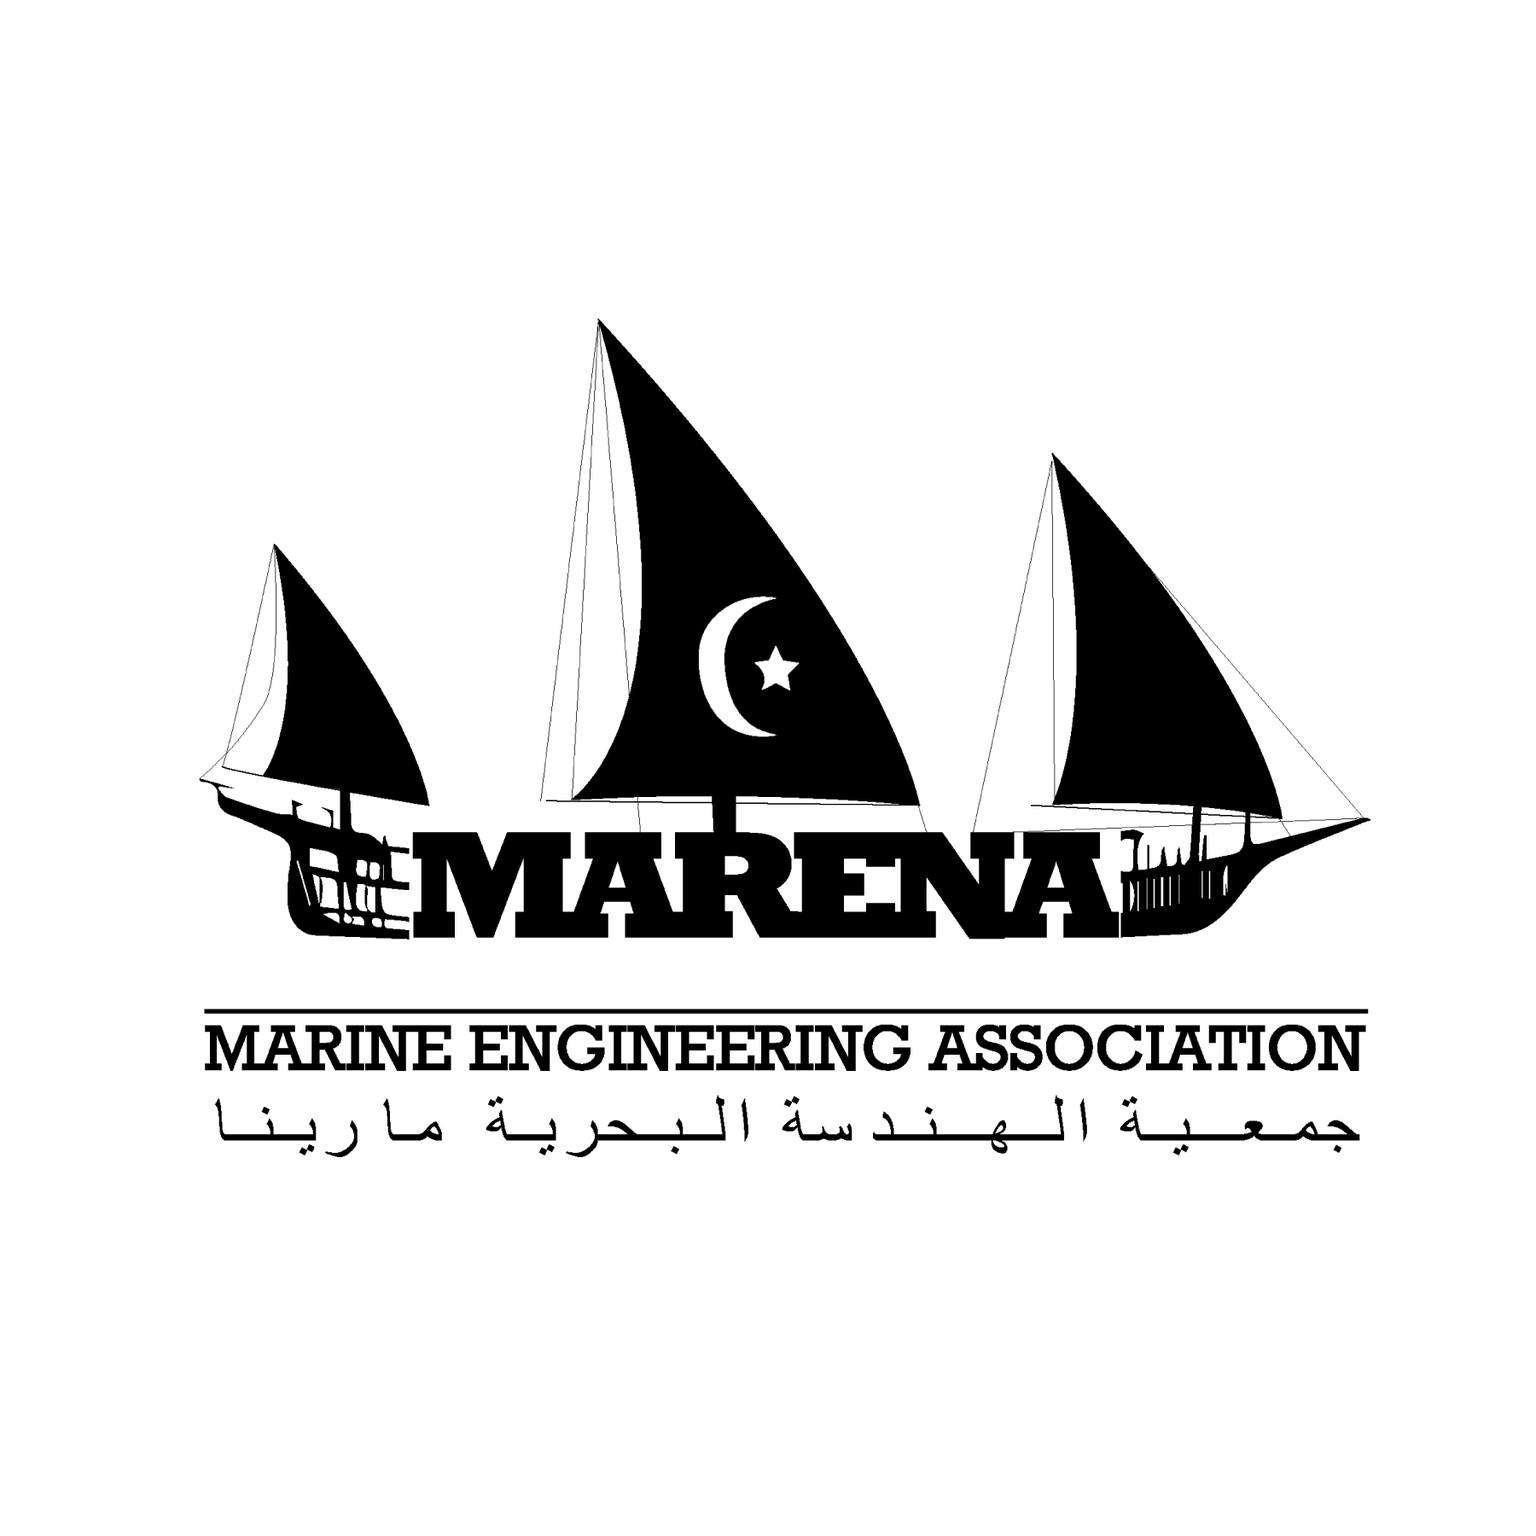 Marine engineering association